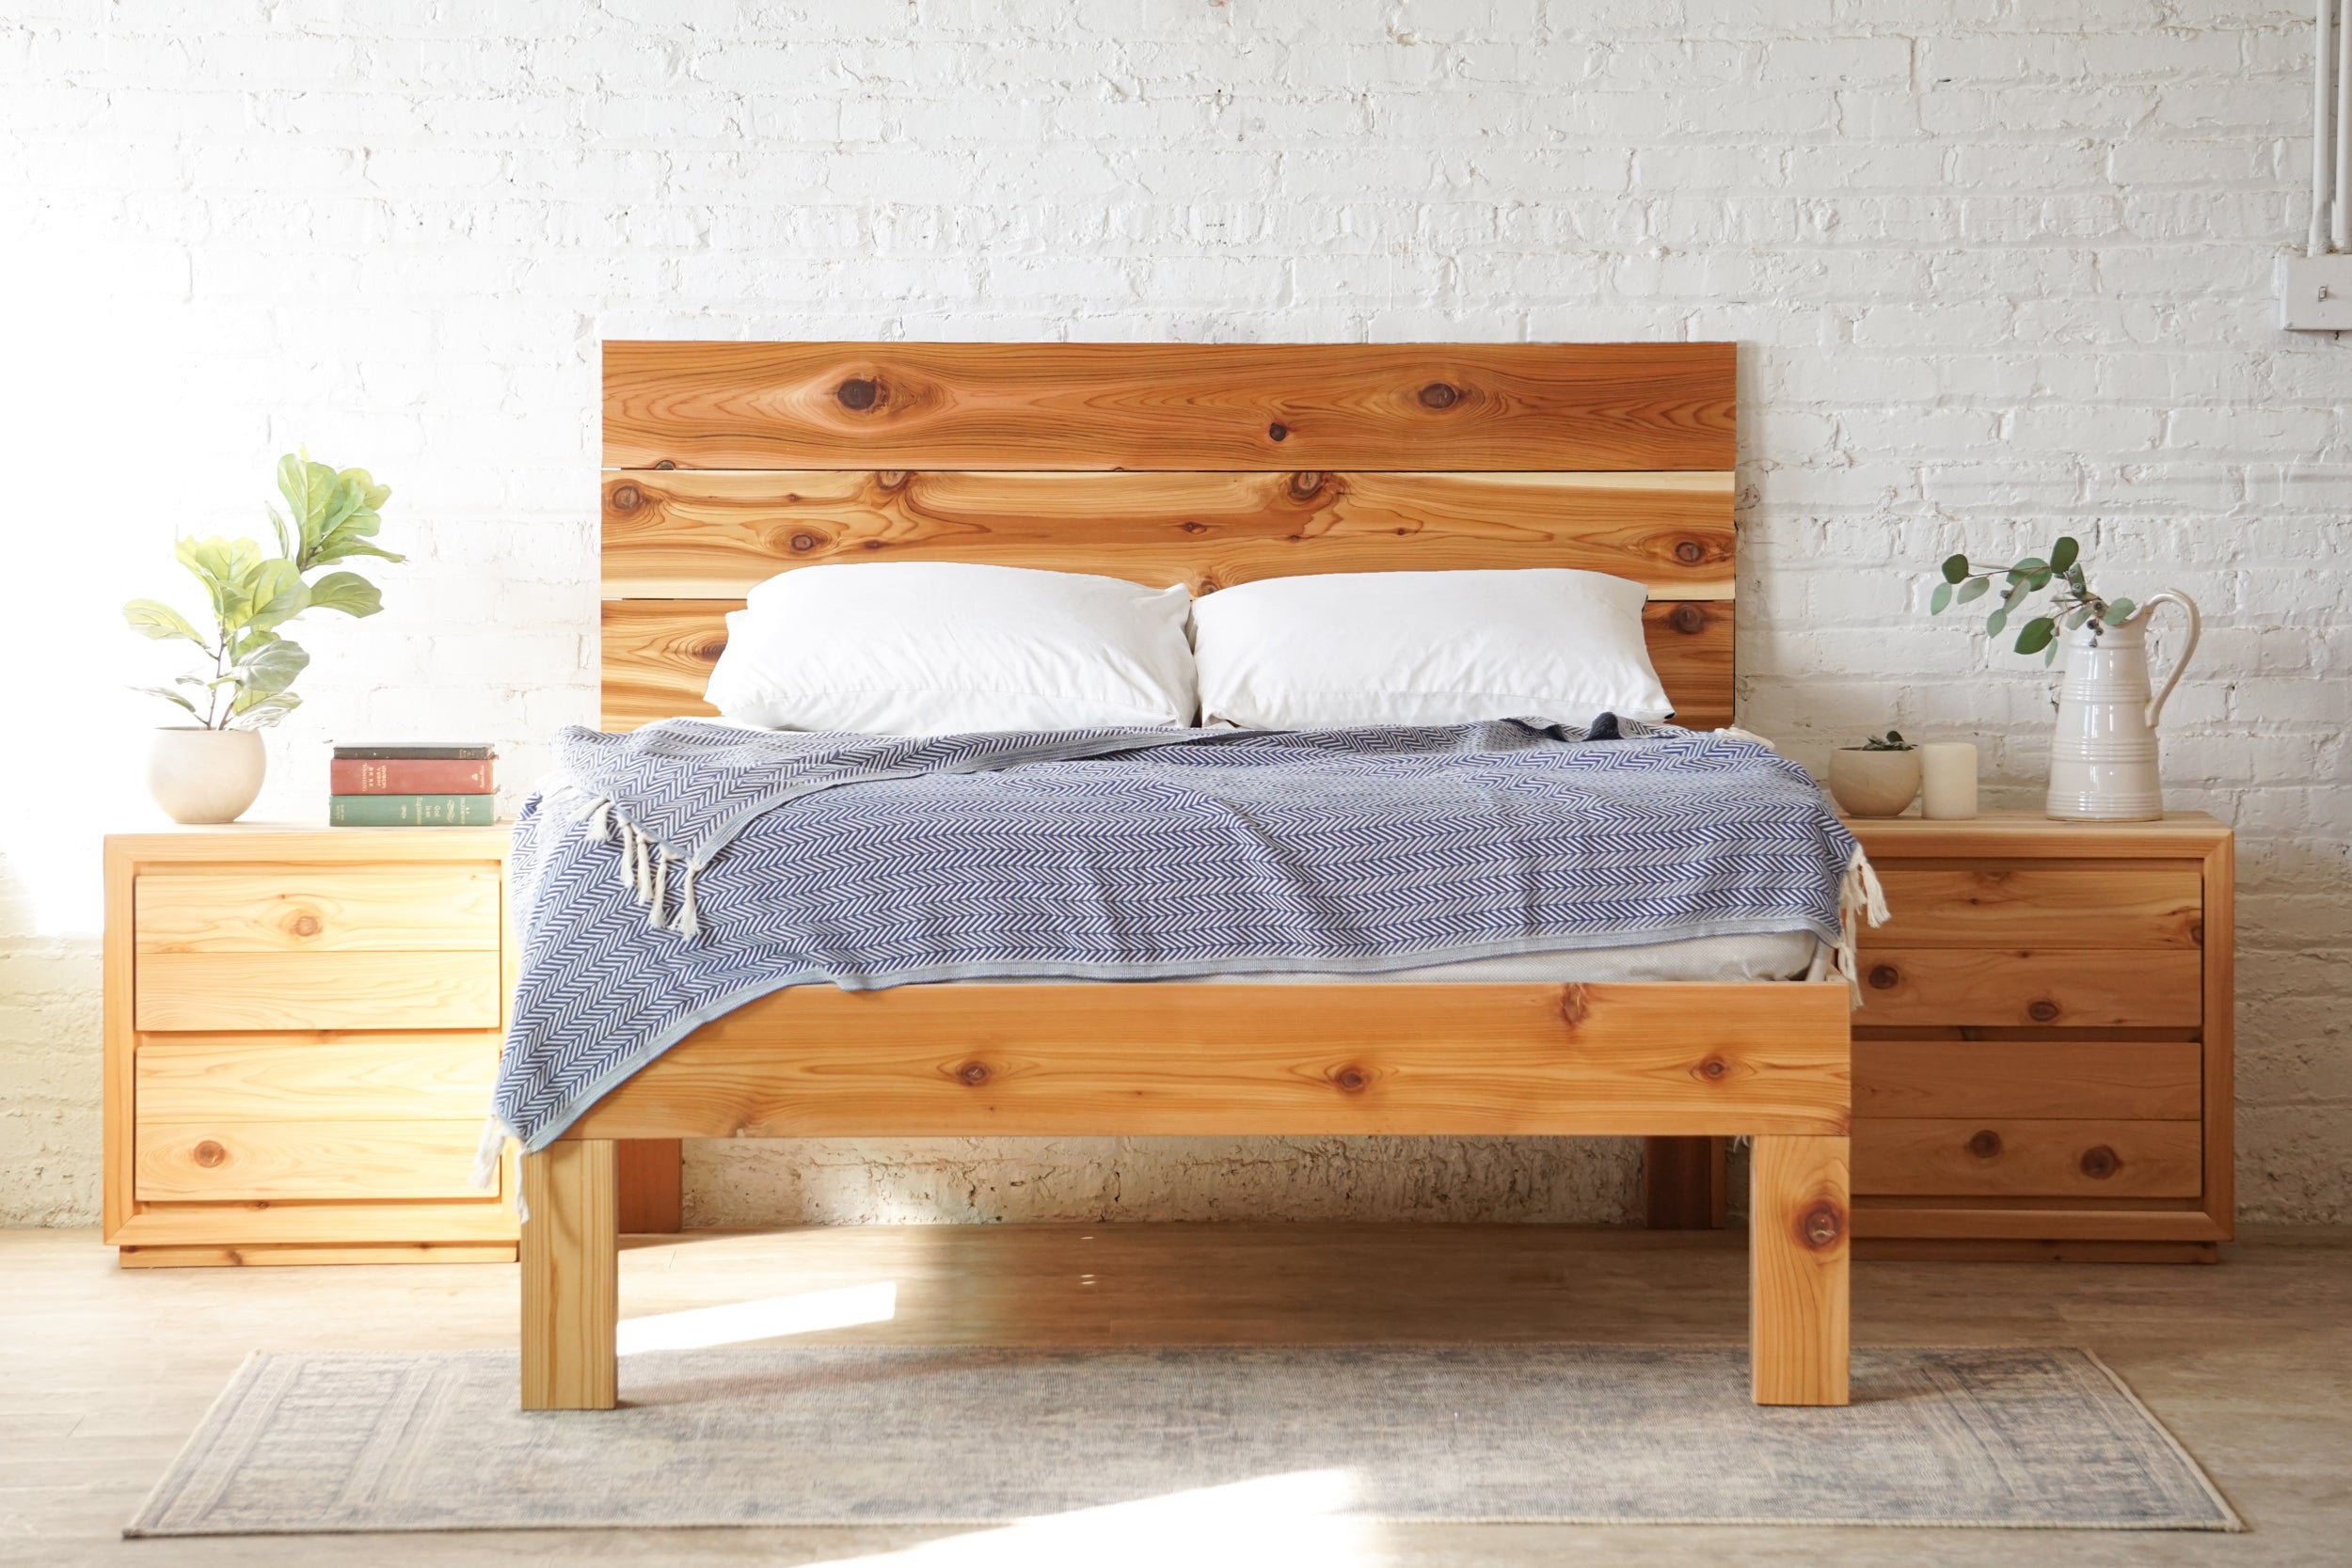 Plank Standing Platform Bed Frame - Rustic Modern Platform and Headboa – Urban